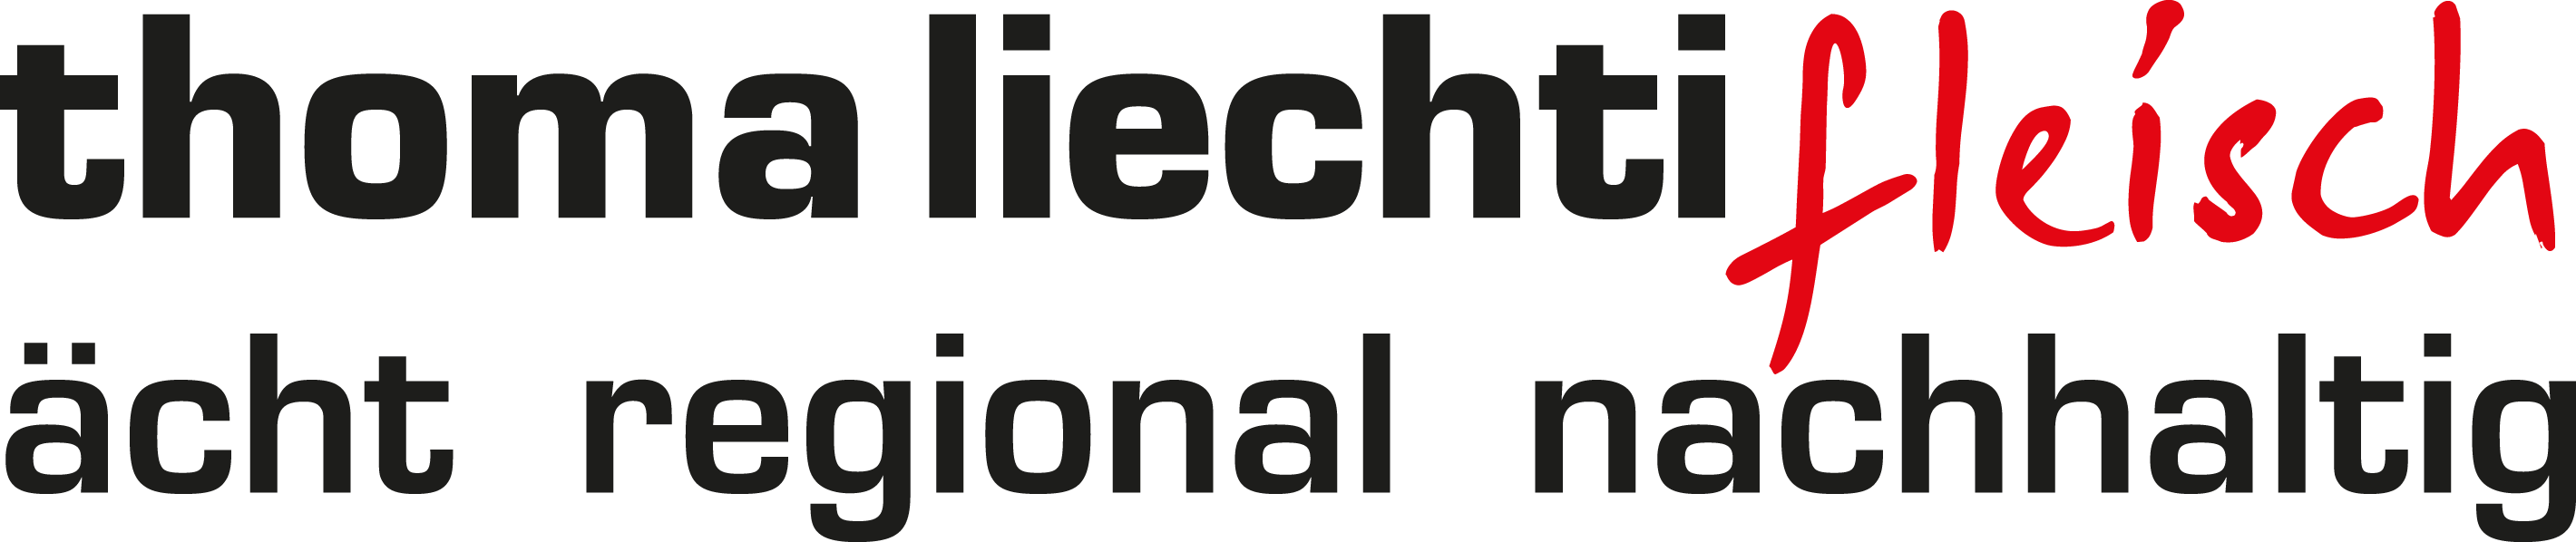 thomaliechti Logo 2022 quer claim pos